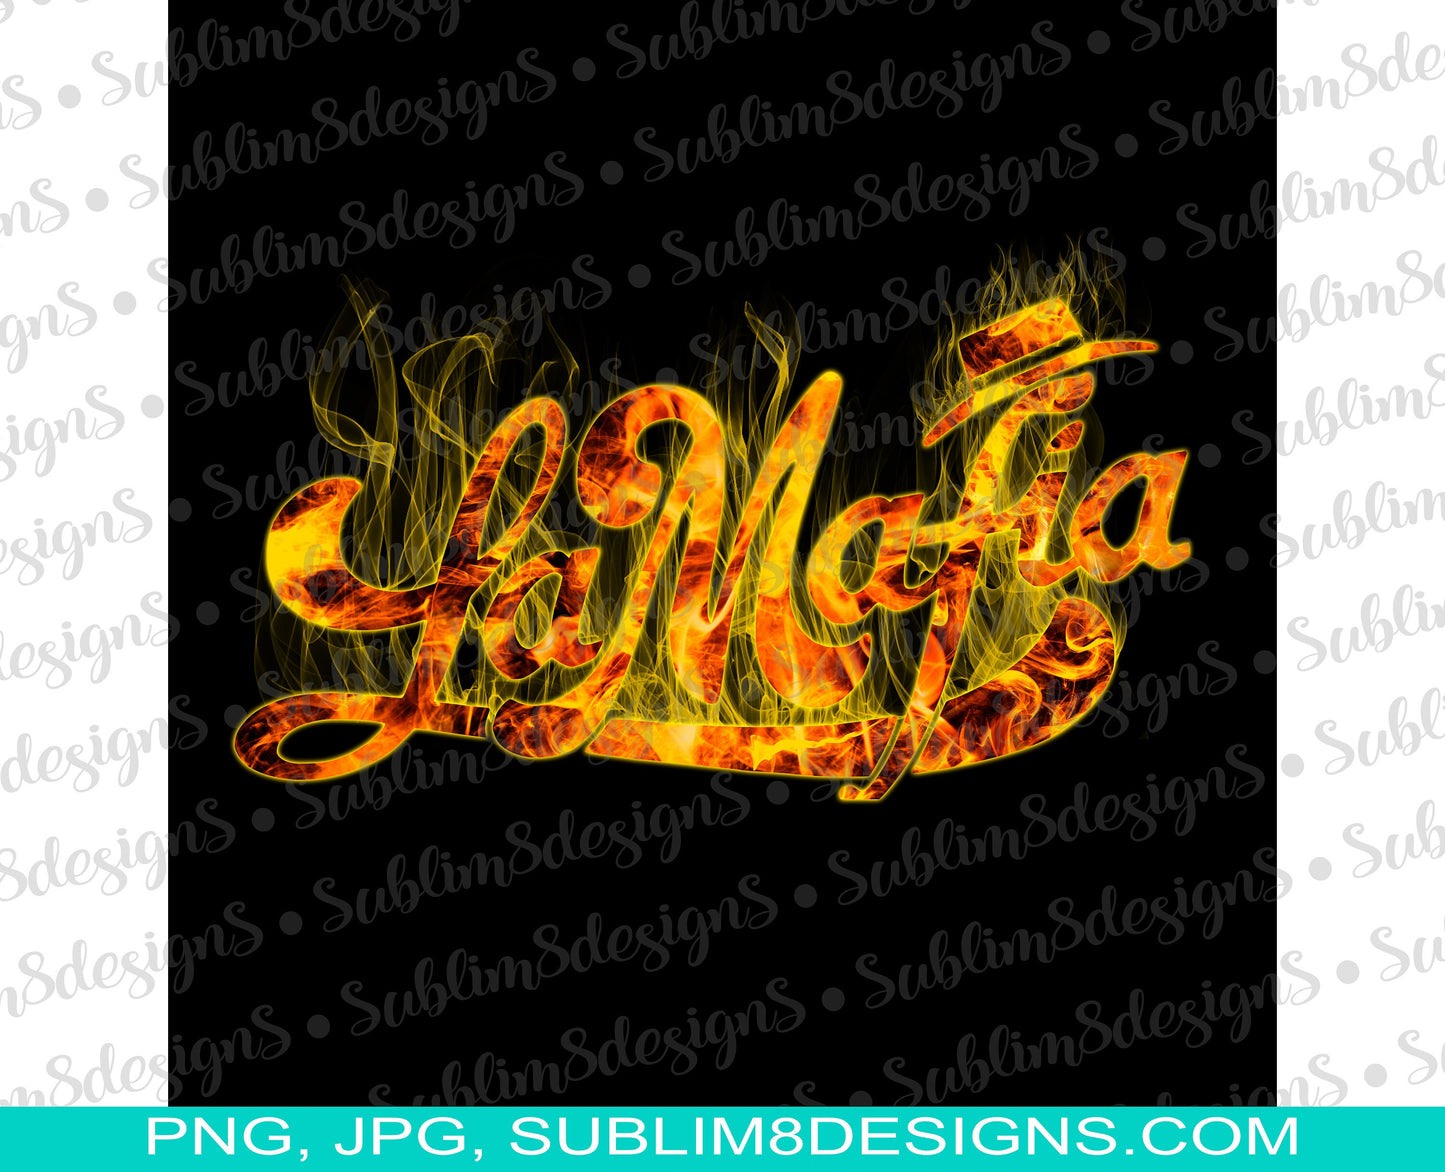 La Mafia Flames PNG and JPG ONLY